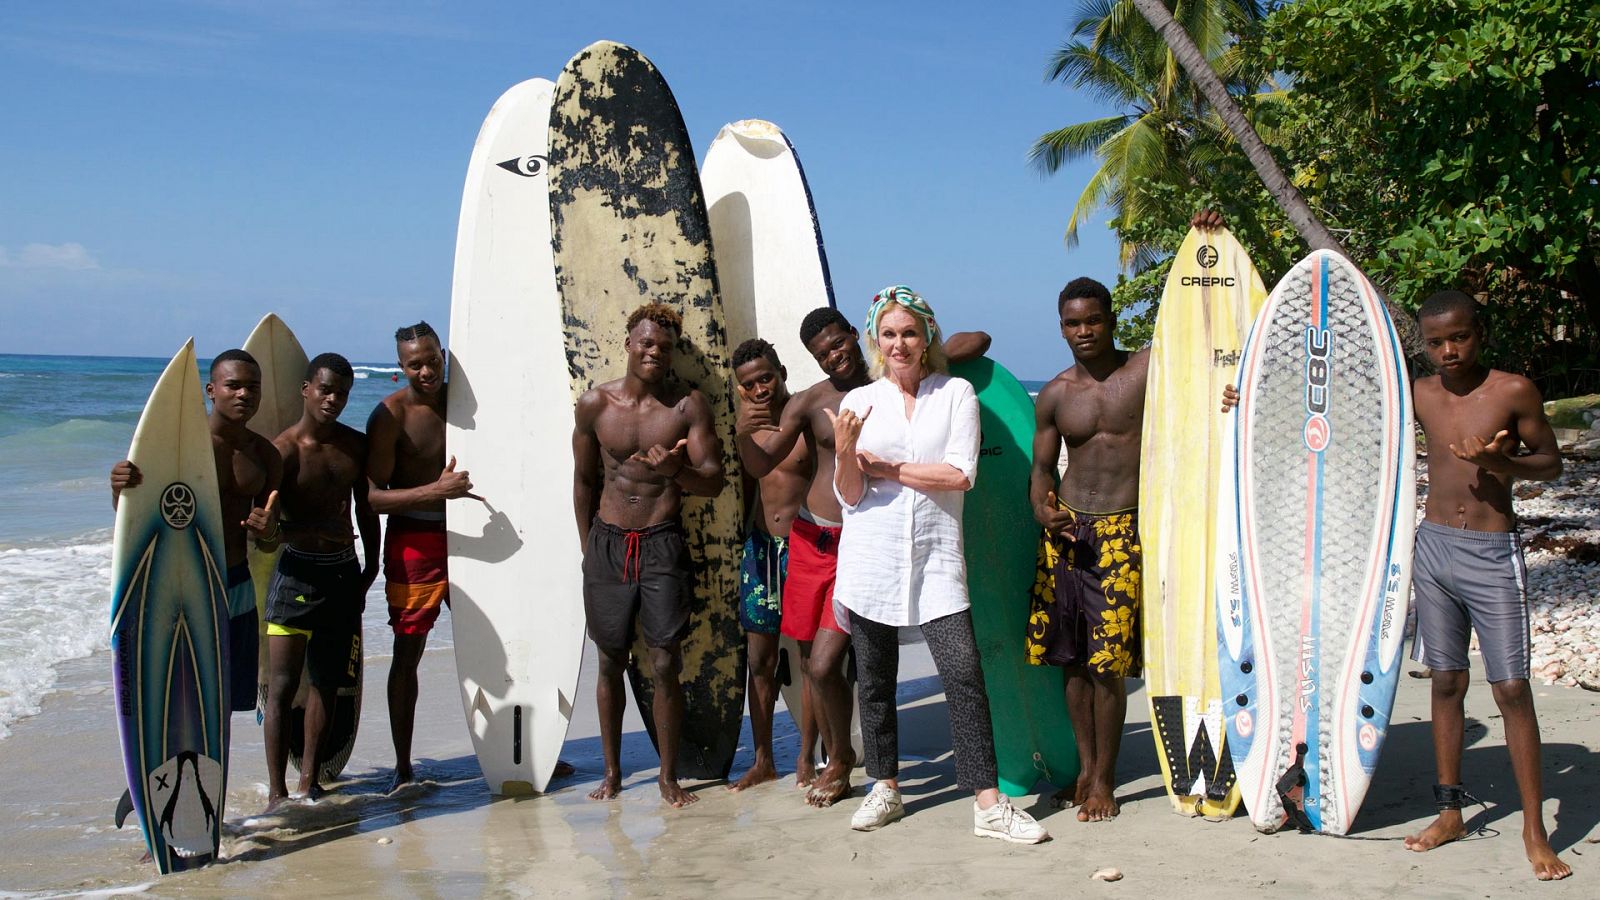 El Caribe oculto de Joanna Lumley. De La Habana a Haití - Episodio 2 - Documental en RTVE